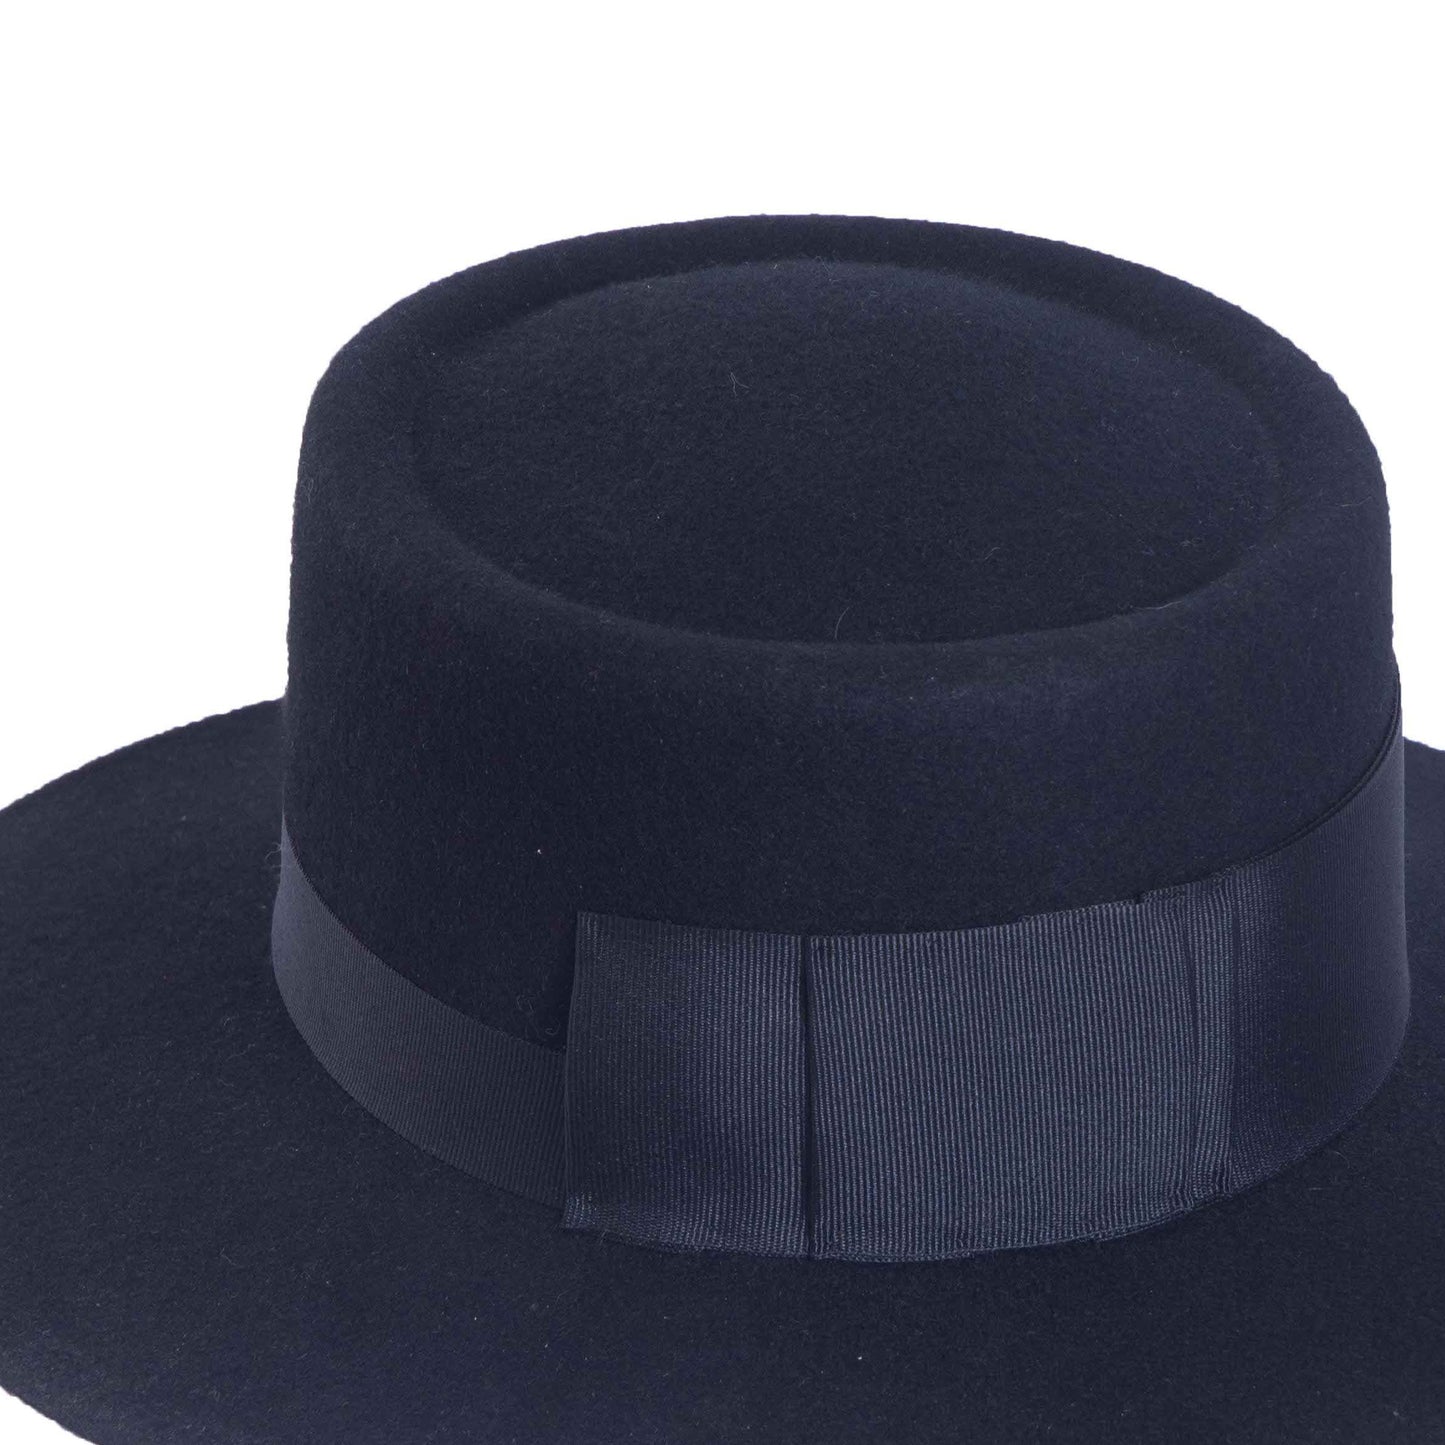 Rodeo, Wool Felt Hat, Black